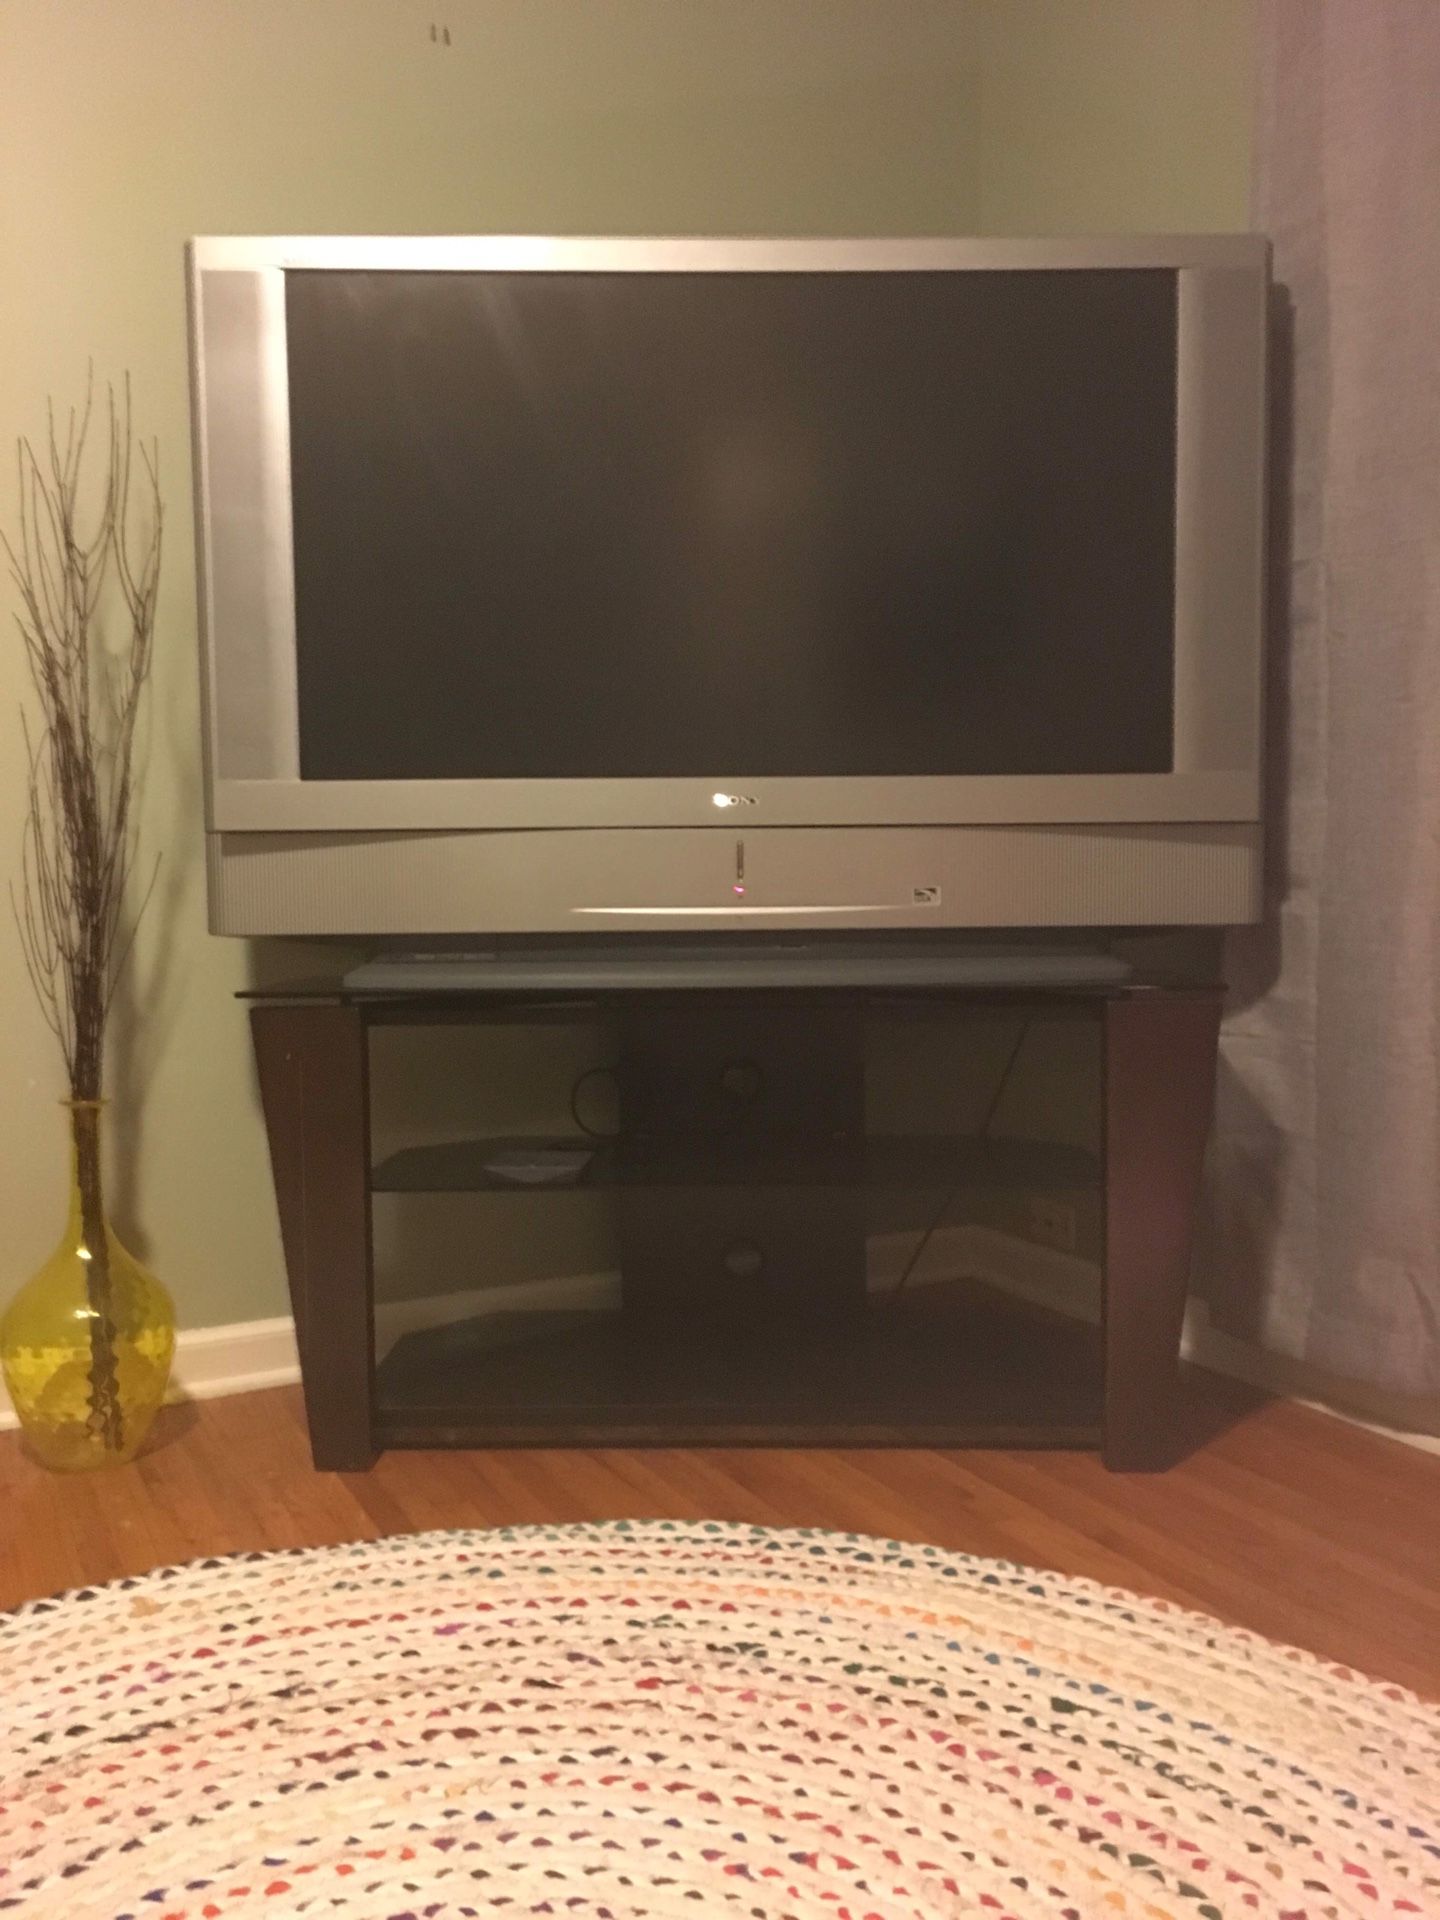 50” SONY WEGA LCD HDTV & STAND! (Great Condition)